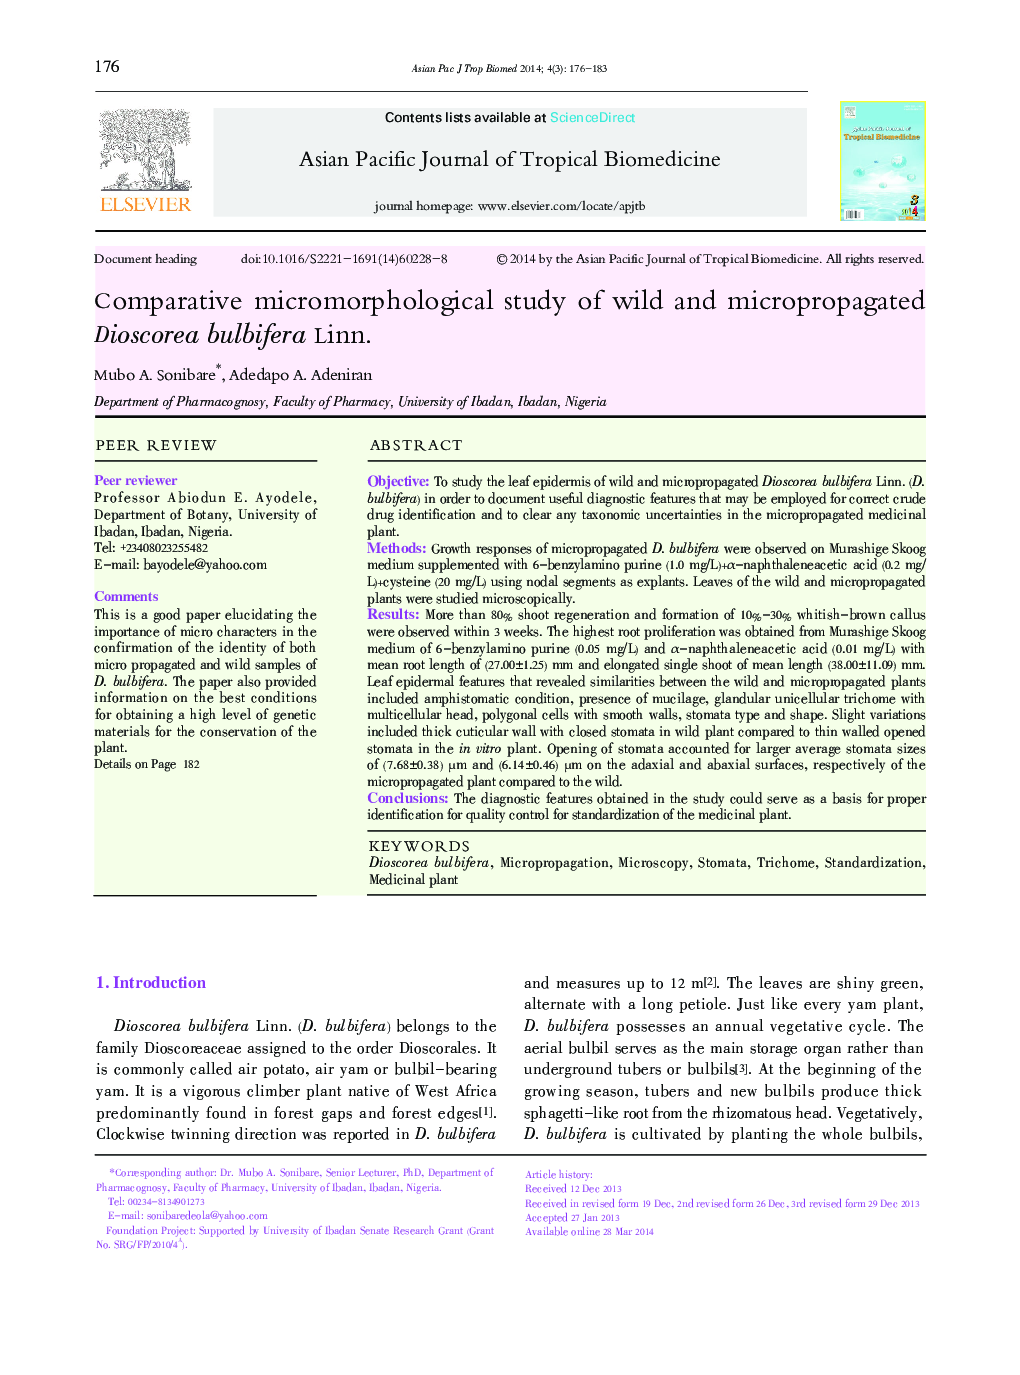 Comparative micromorphological study of wild and micropropagated Dioscorea bulbifera Linn. 